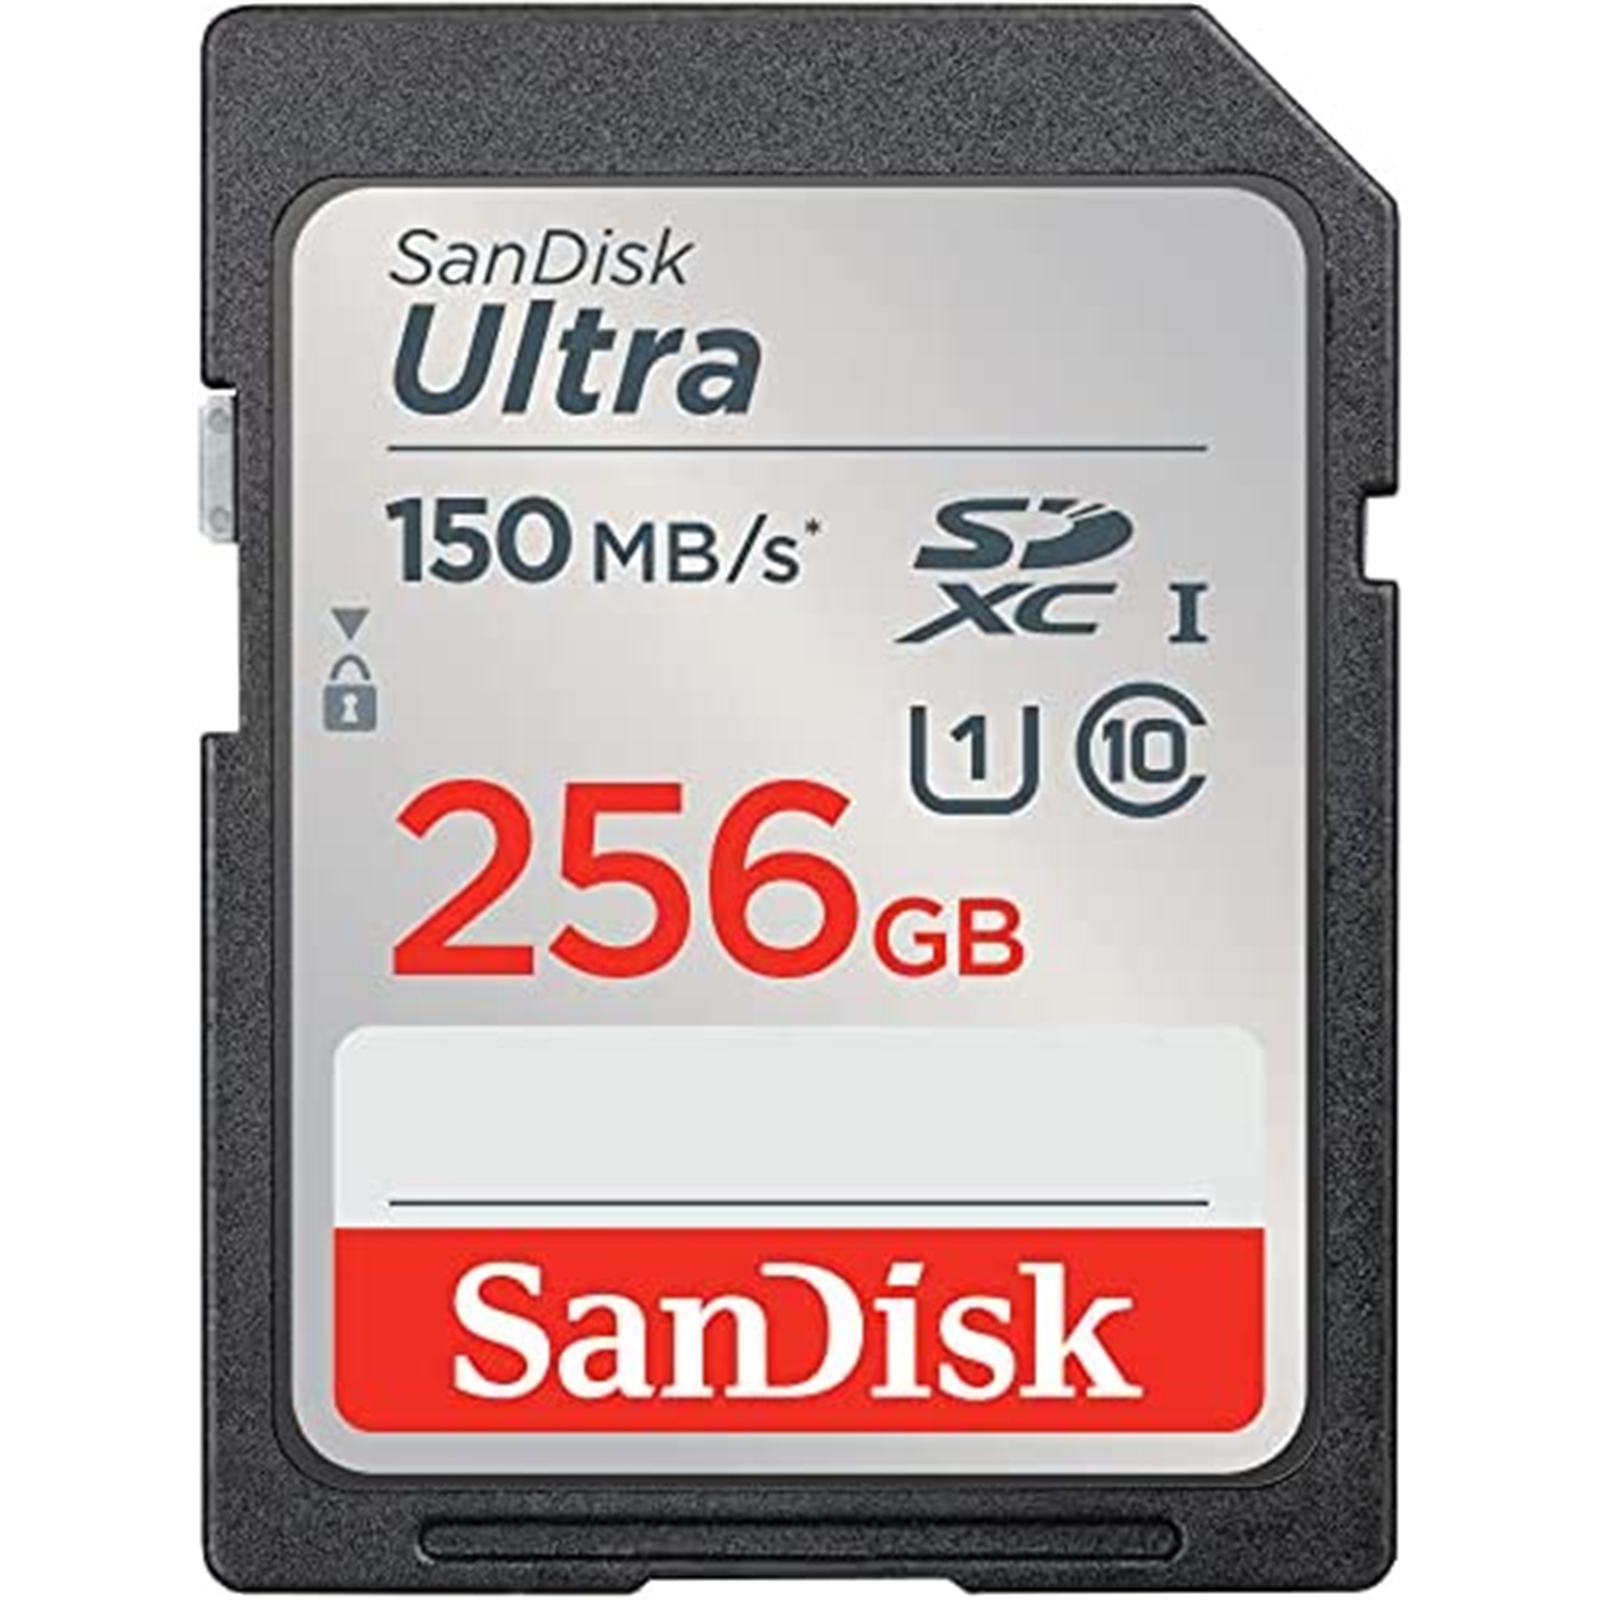 SanDisk SD Ultra SDHC/SDXC Memory Card - 256GB